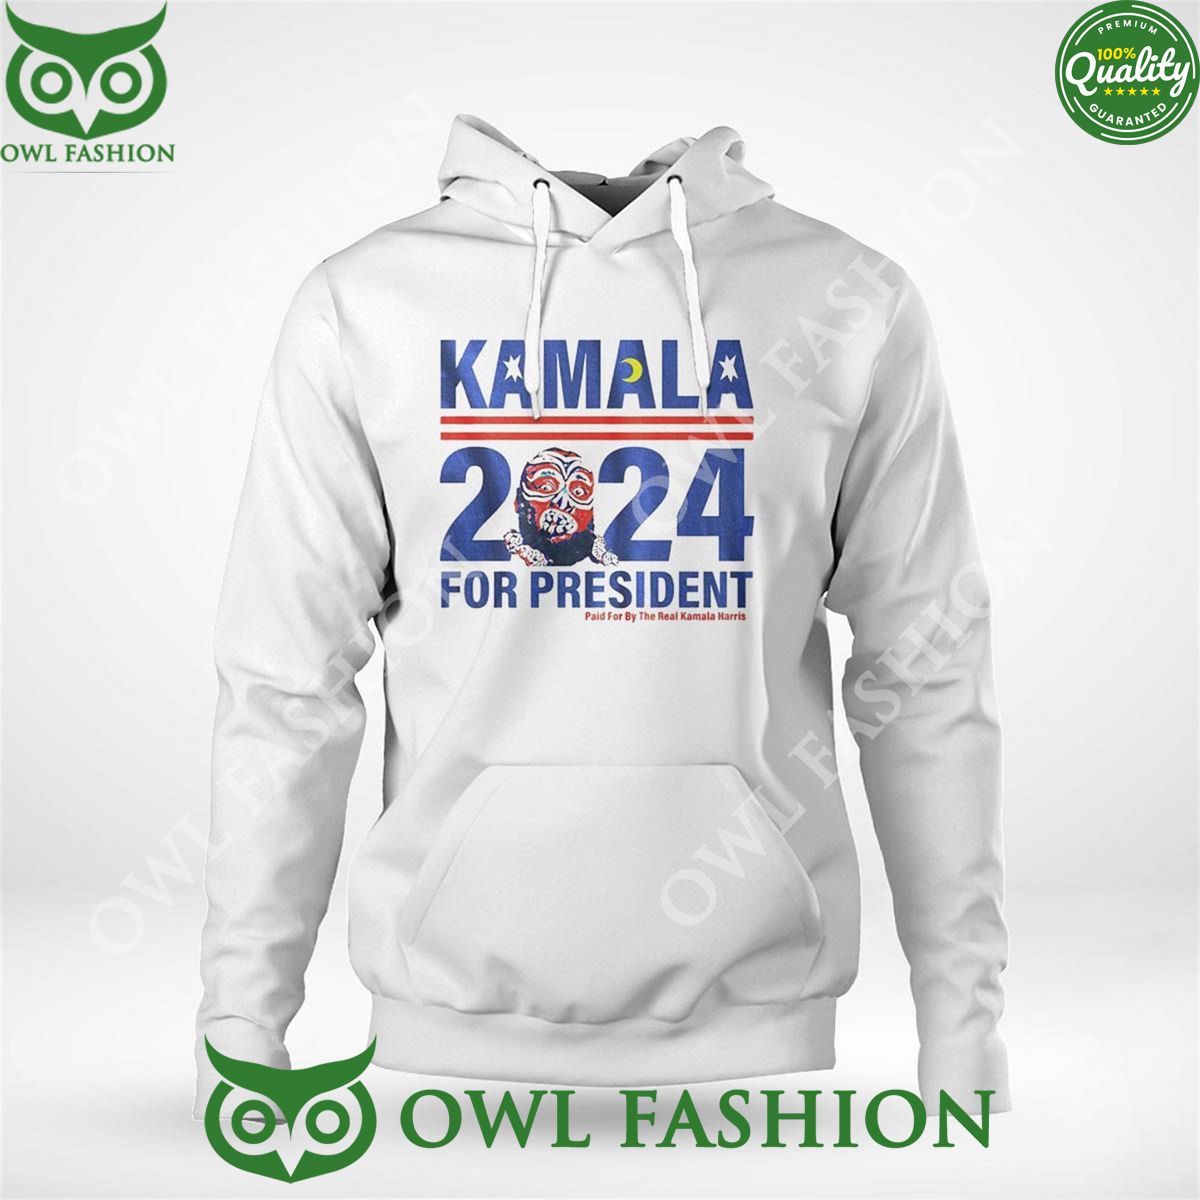 2024 kamala for president paid for by the real kamala harris shirt 1 2lWaQ.jpg